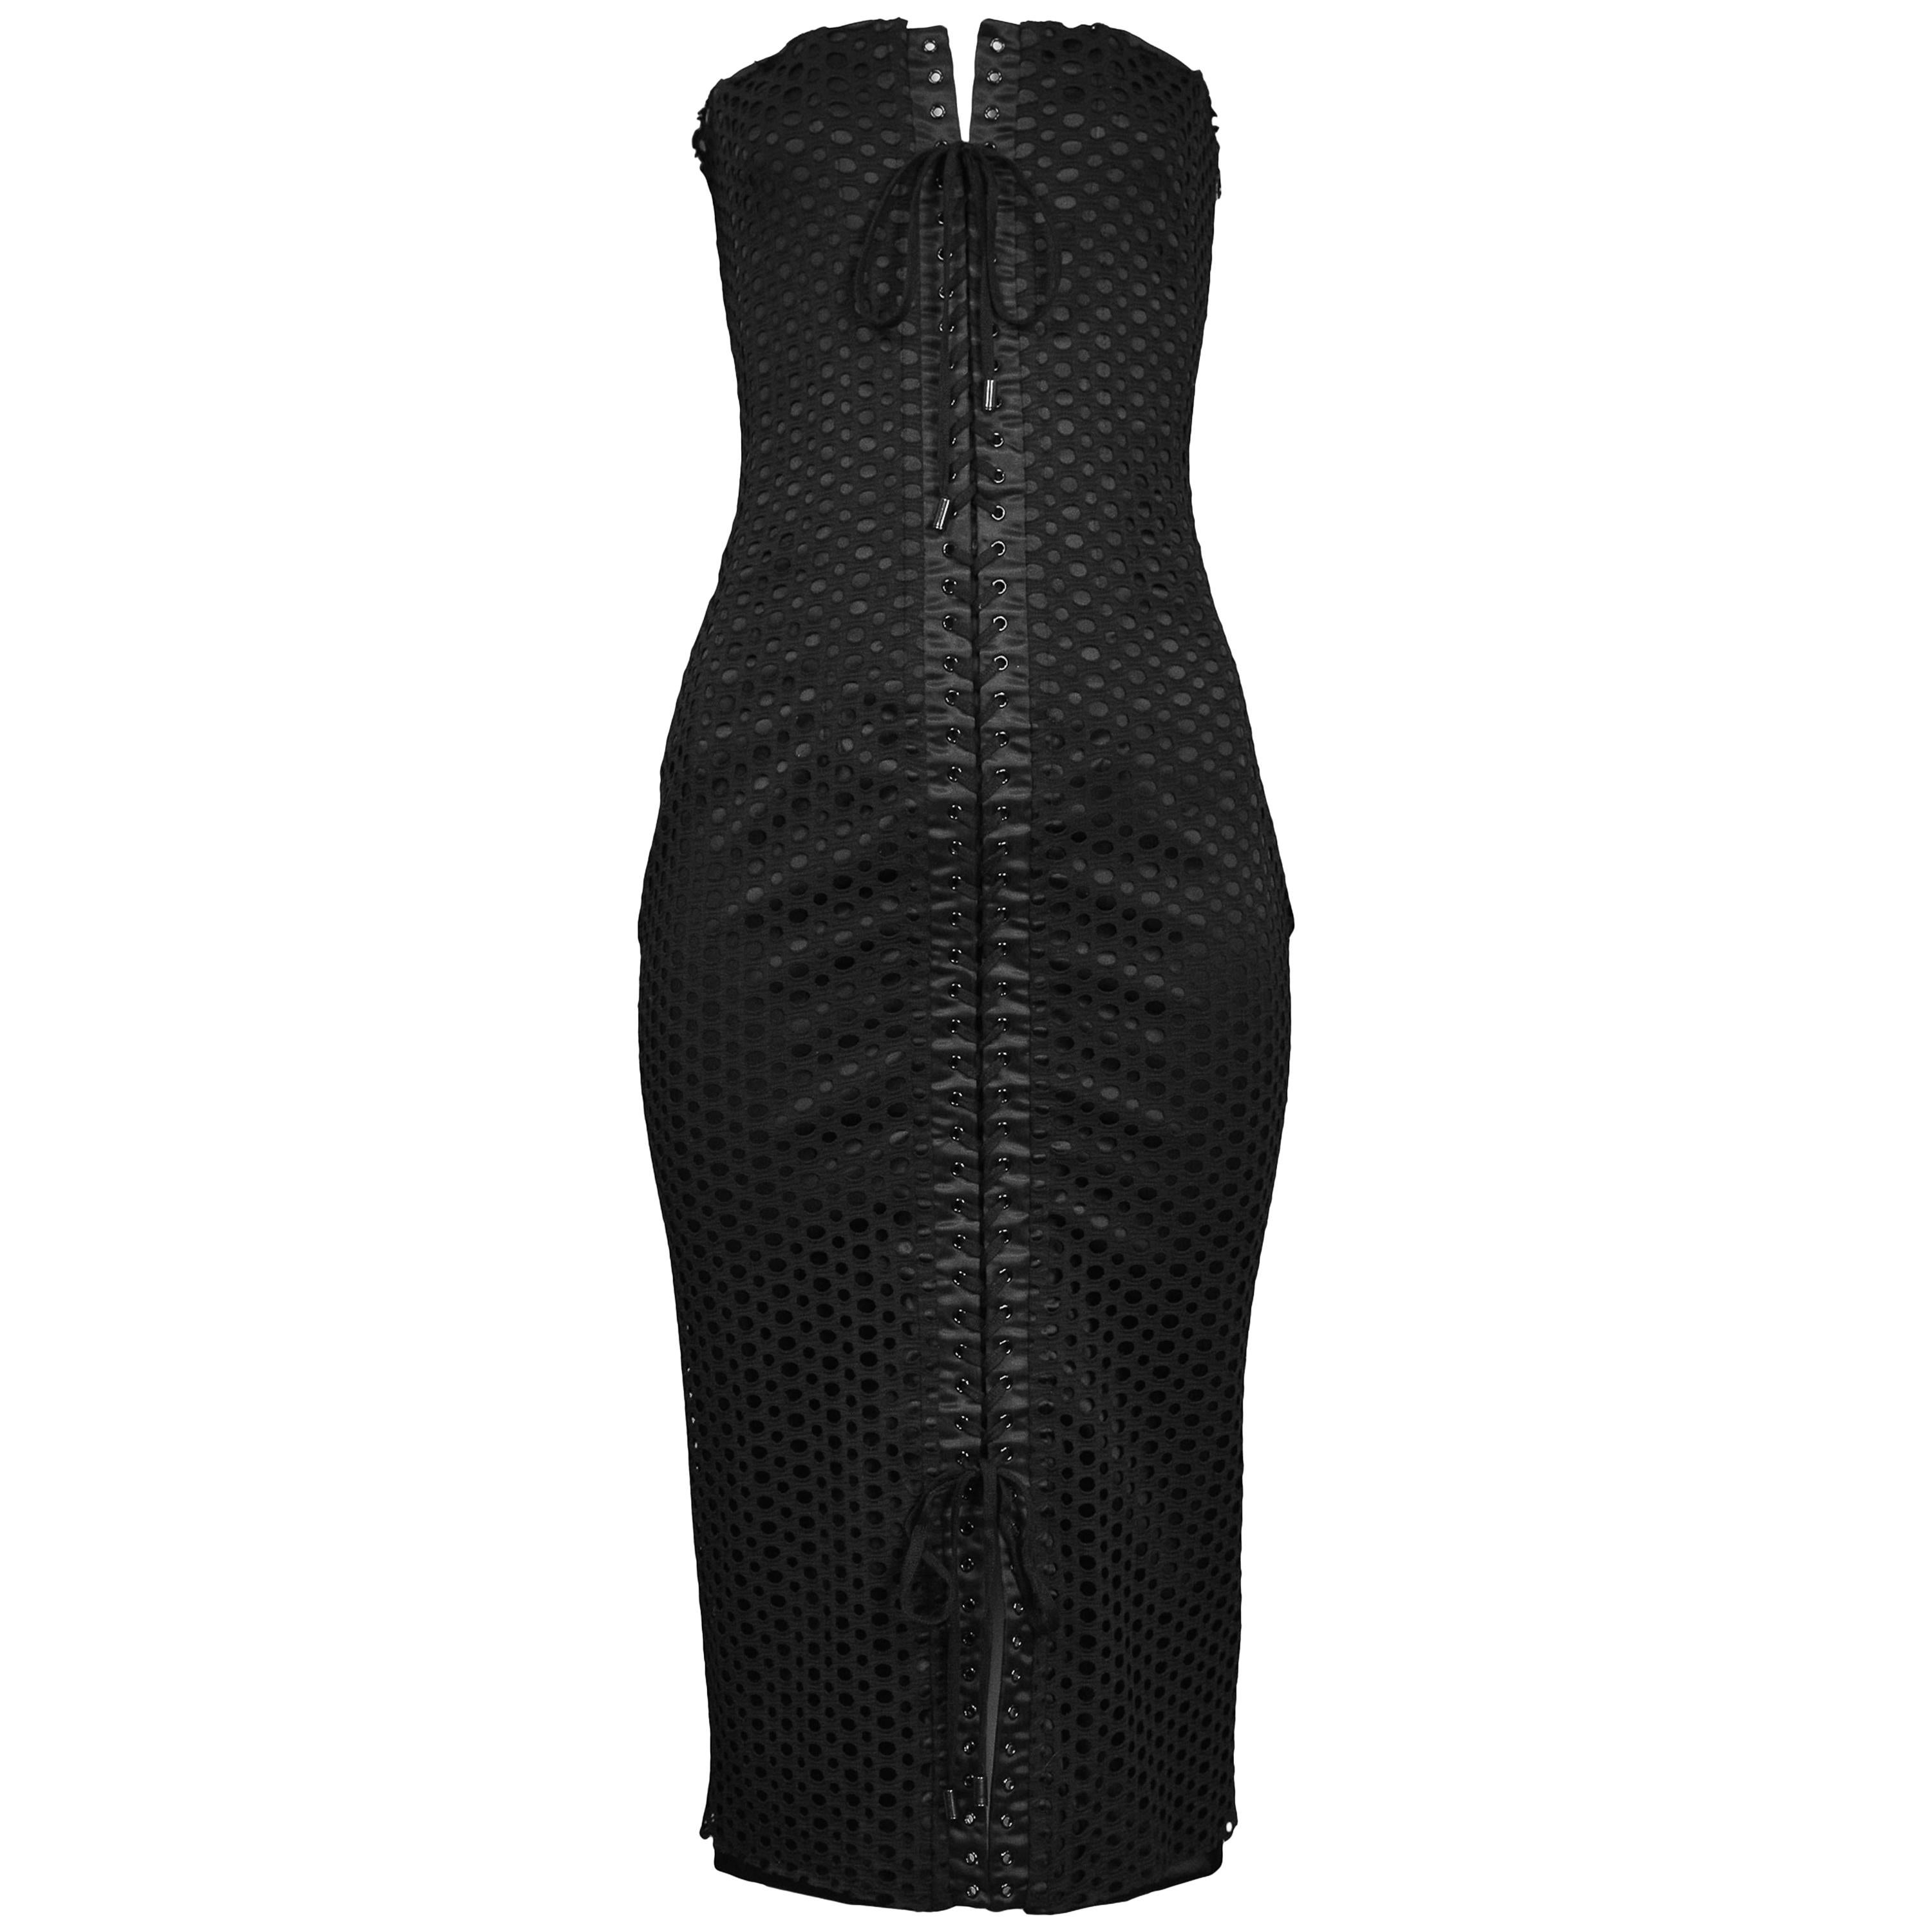 Dolce & Gabbana Black Perforated Mesh Dress